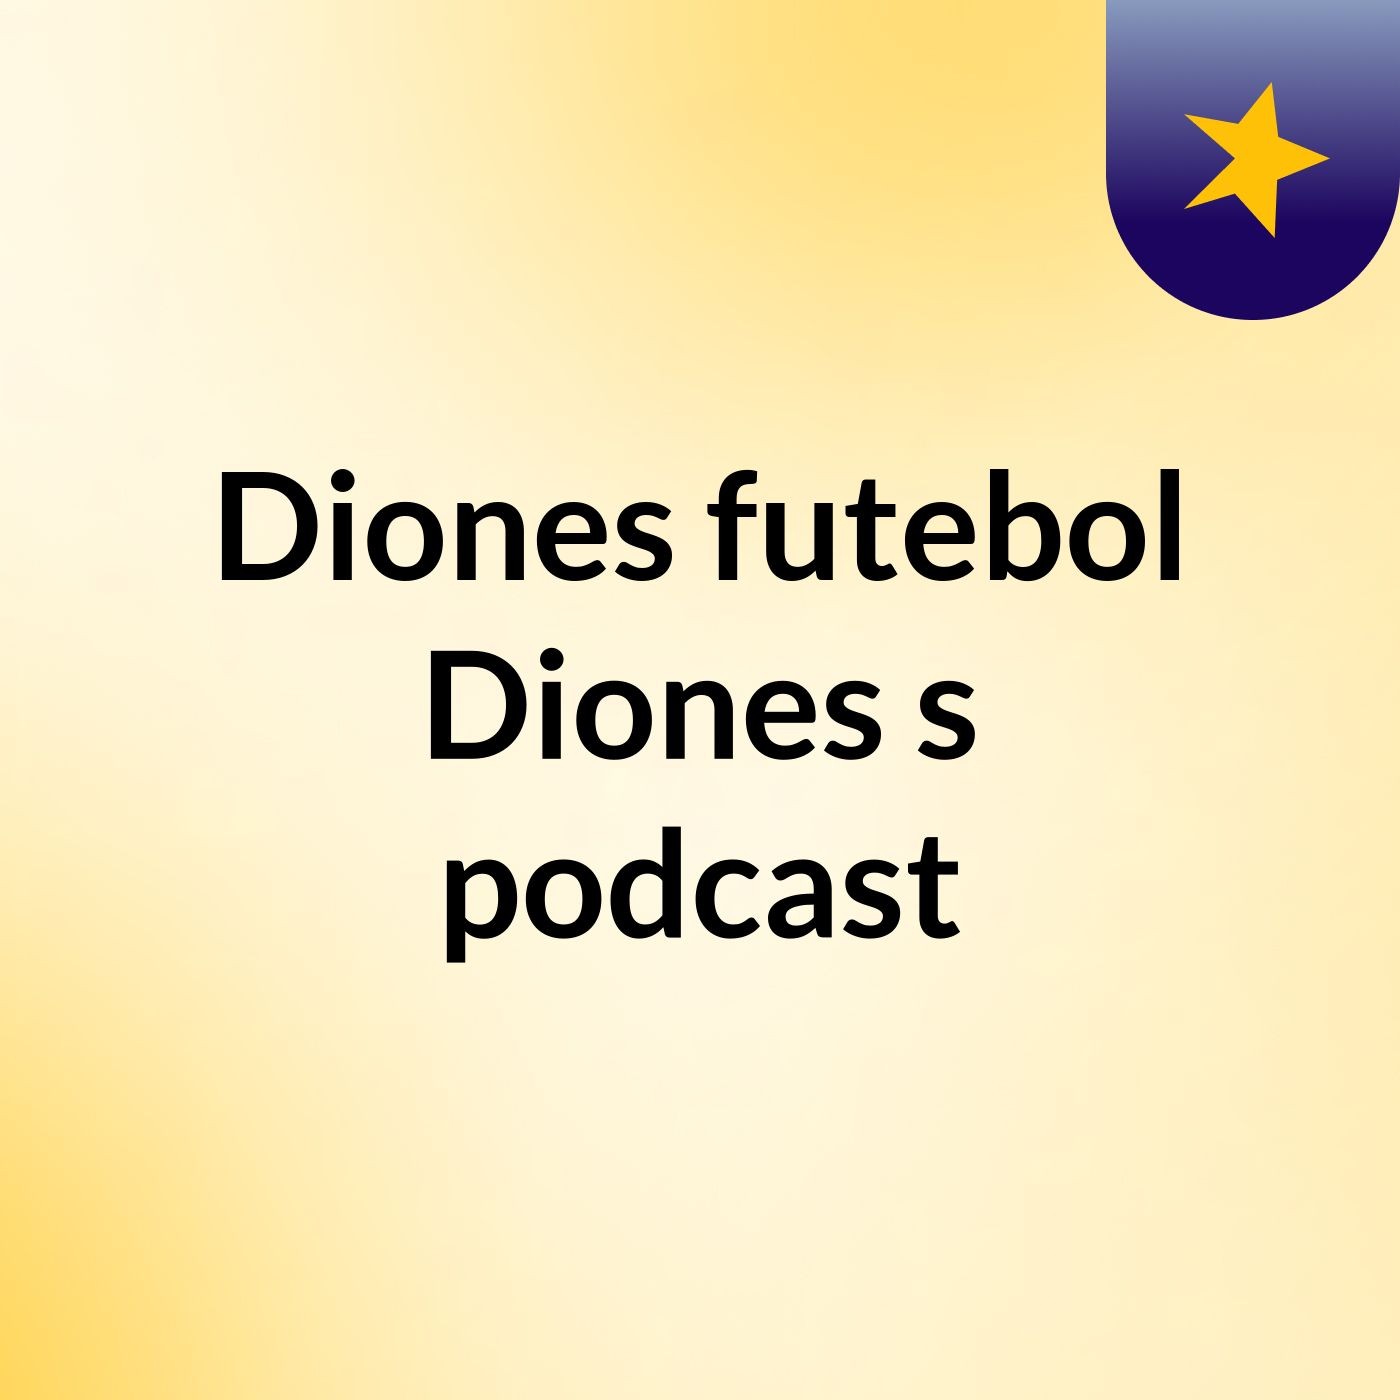 Diones futebol Diones's podcast